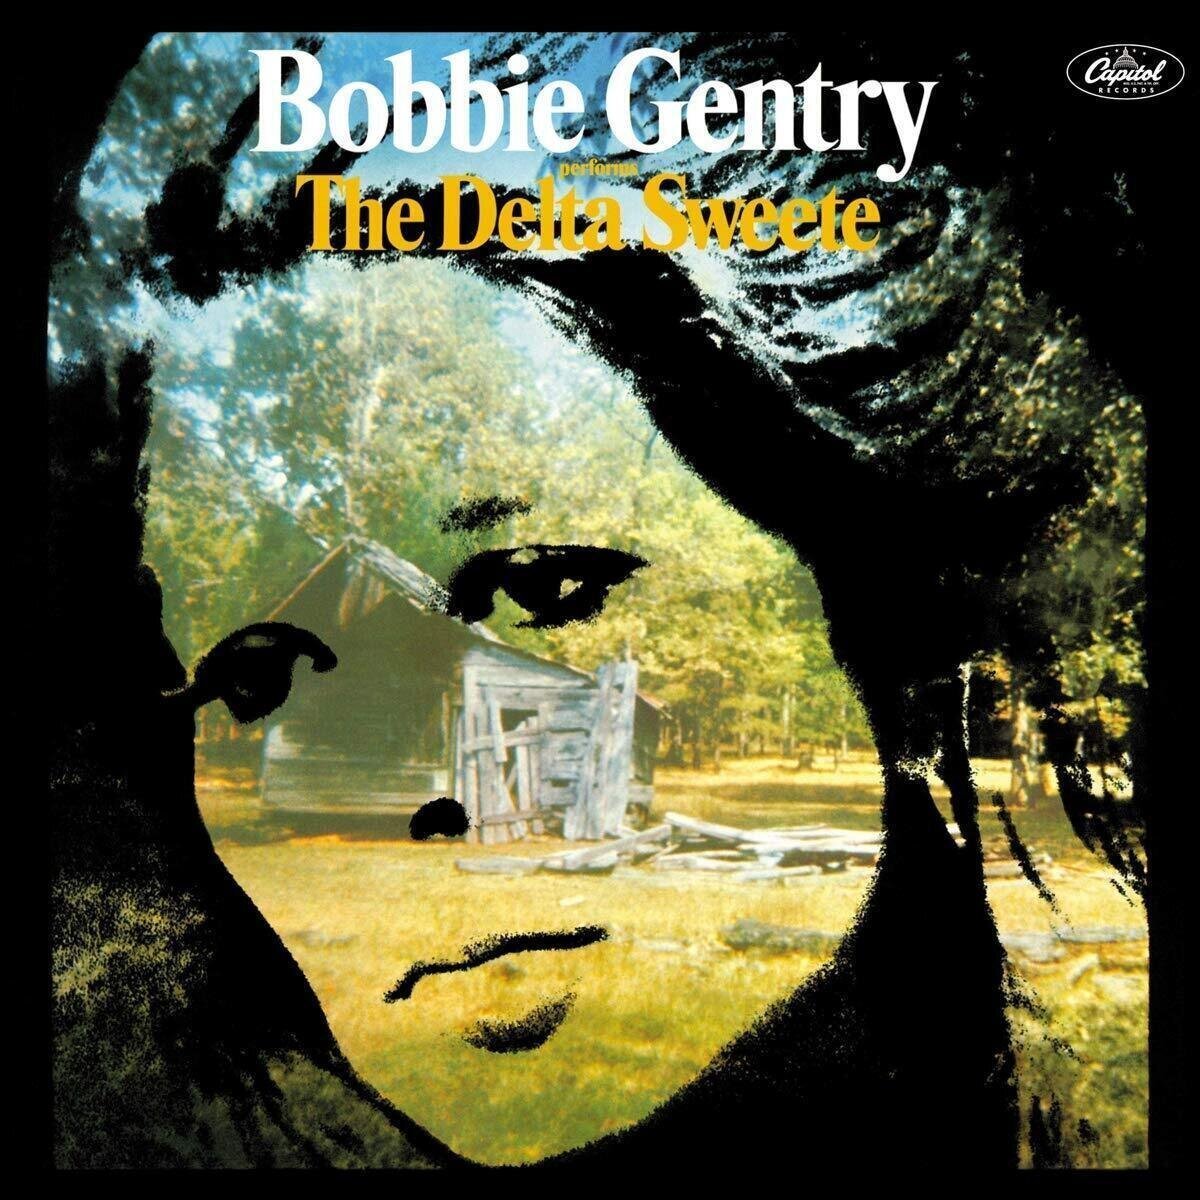 Vinyl Record Bobbie Gentry - The Delta Sweete (Deluxe Edition) (2 LP)